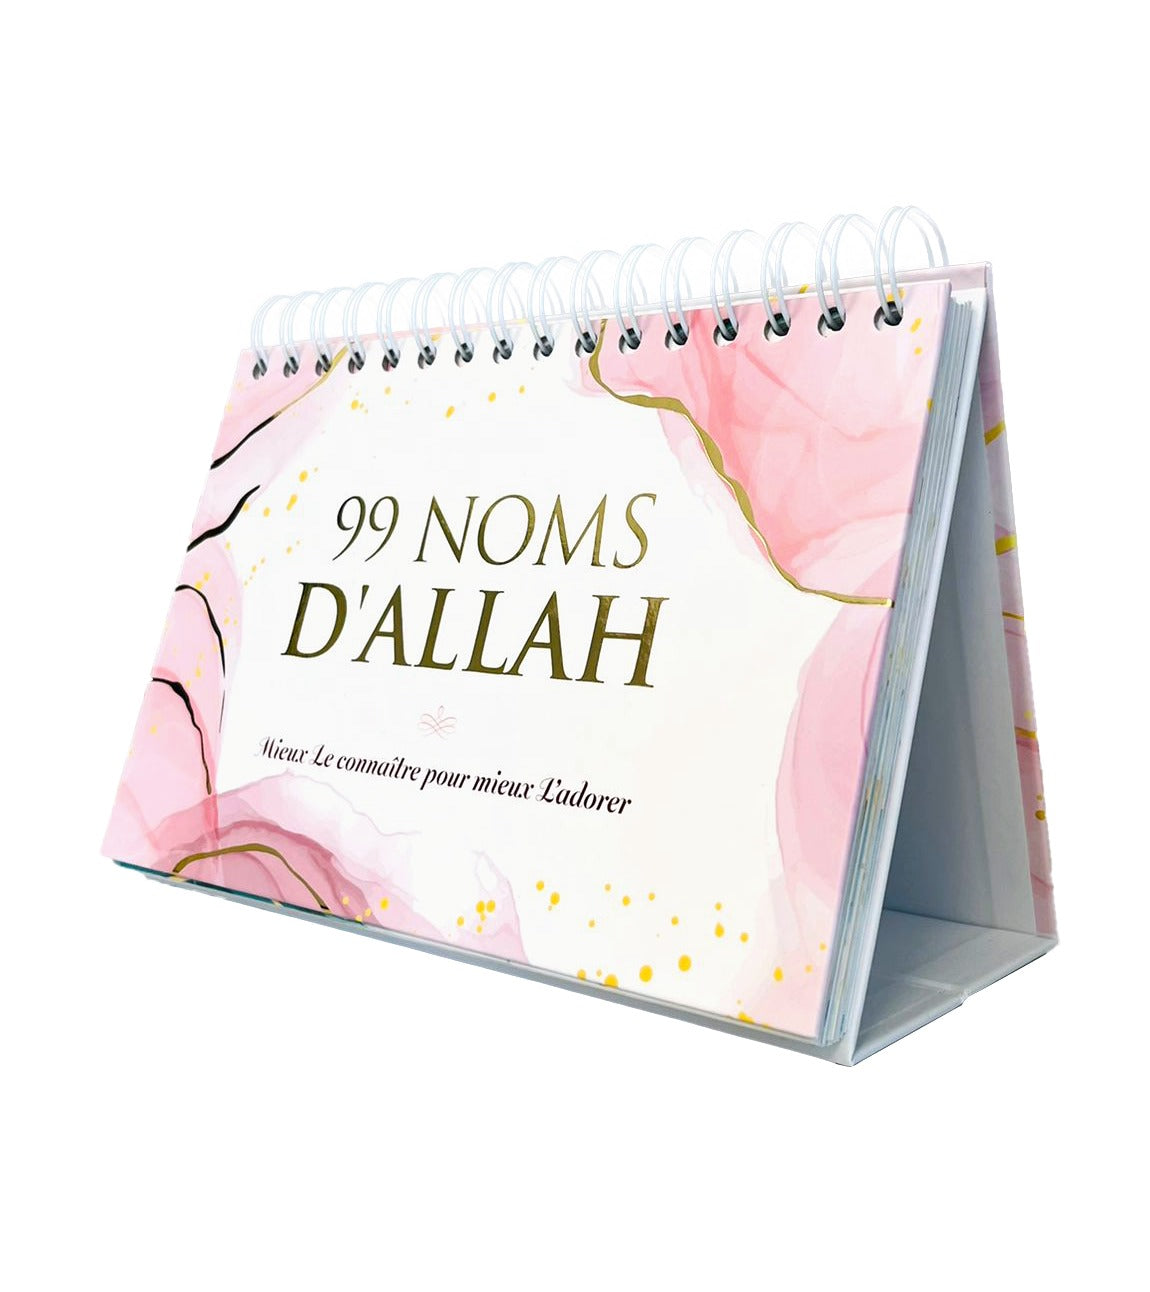 99 noms D'ALLAH-calendrier musulman